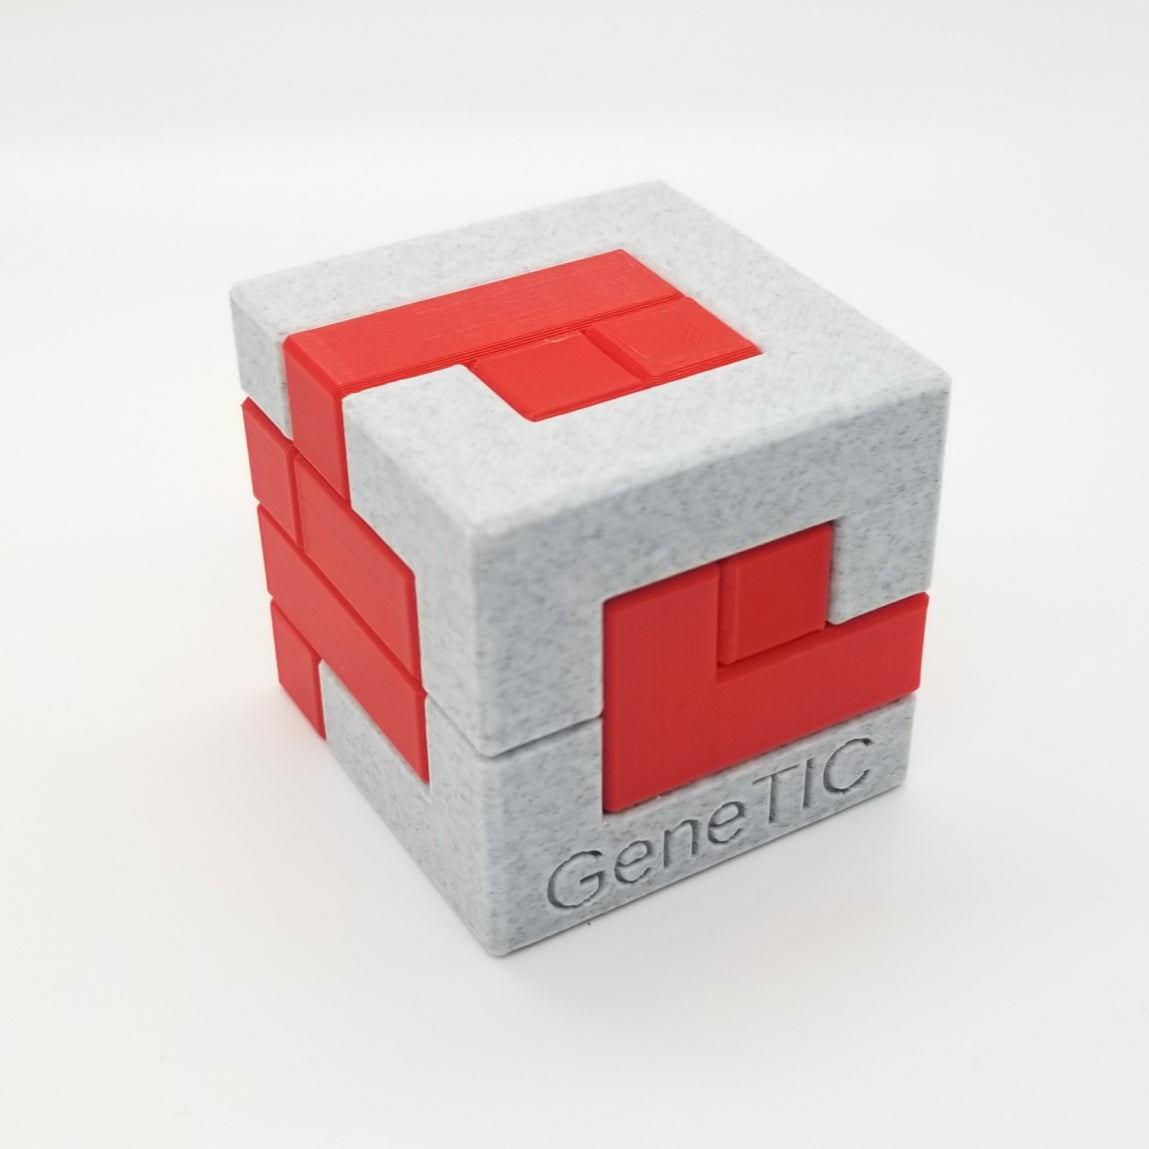 My Favorite Turning Interlocking Cube Series - 3D Printed TIC Puzzles